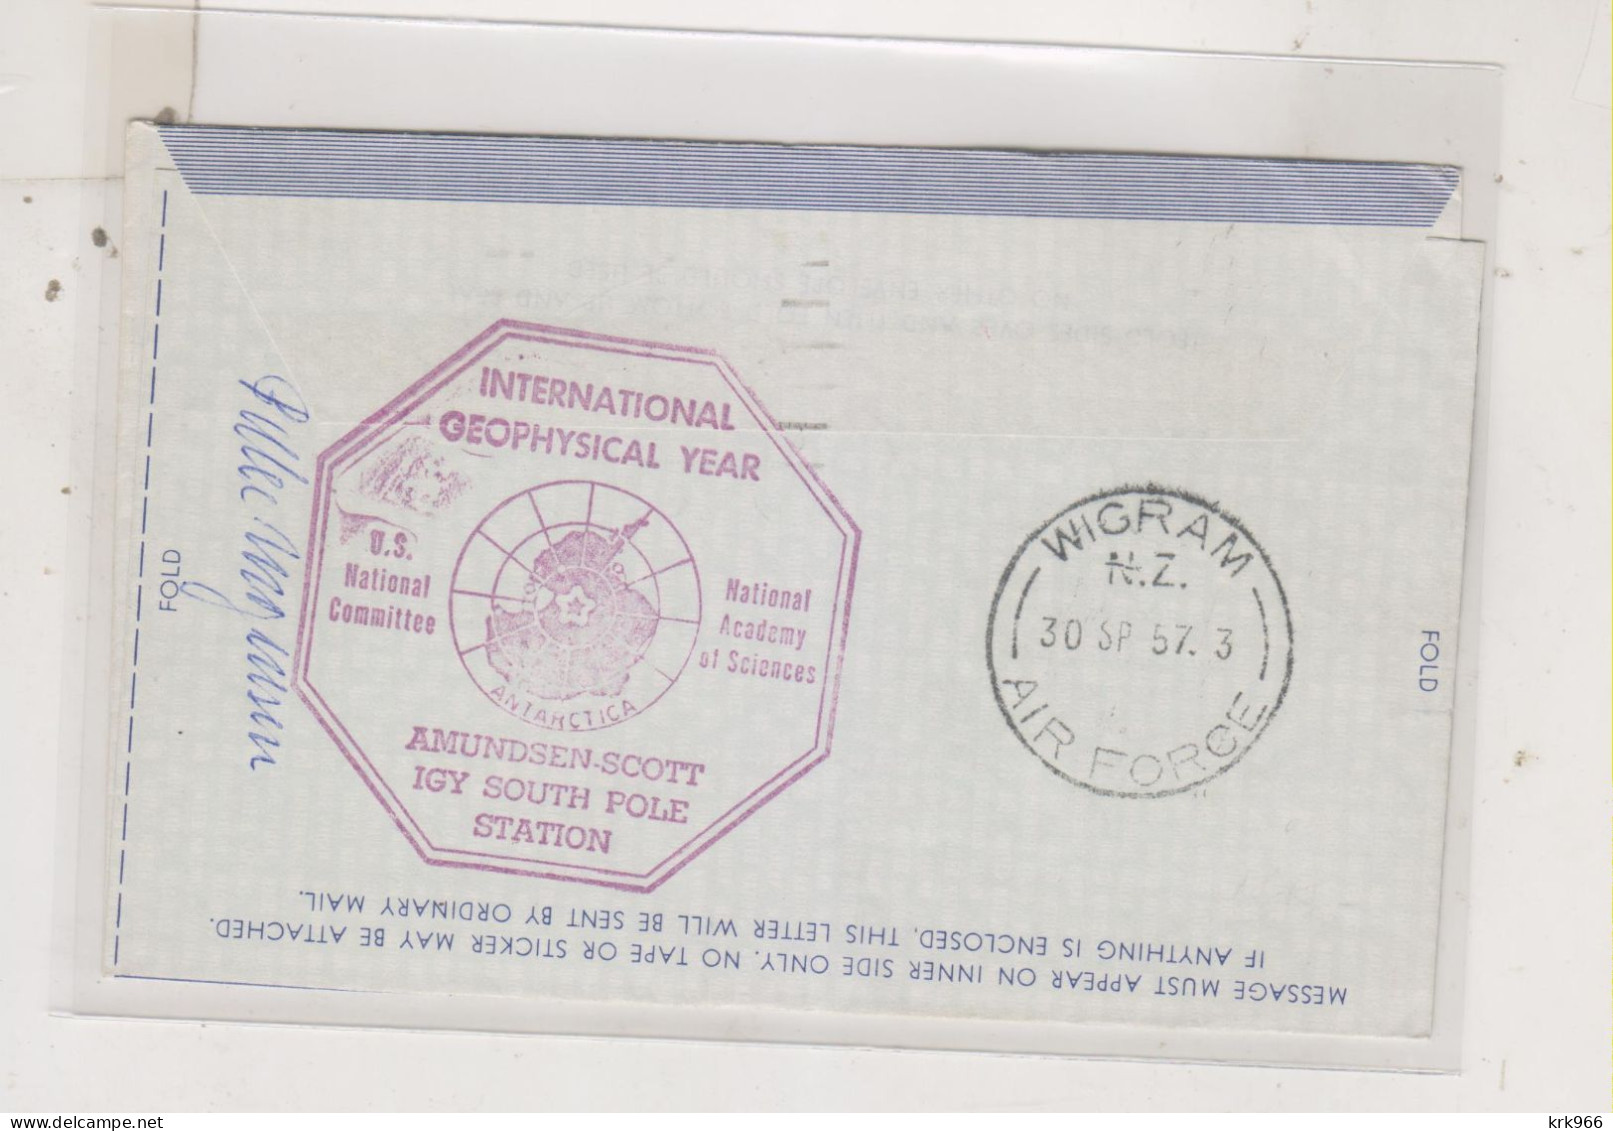 UNITED NATIONS 1957 Nice Airmail Stationery NEW YORK To AMUNDSEN SCOTT IGY SOUTH POLE STATION - Brieven En Documenten